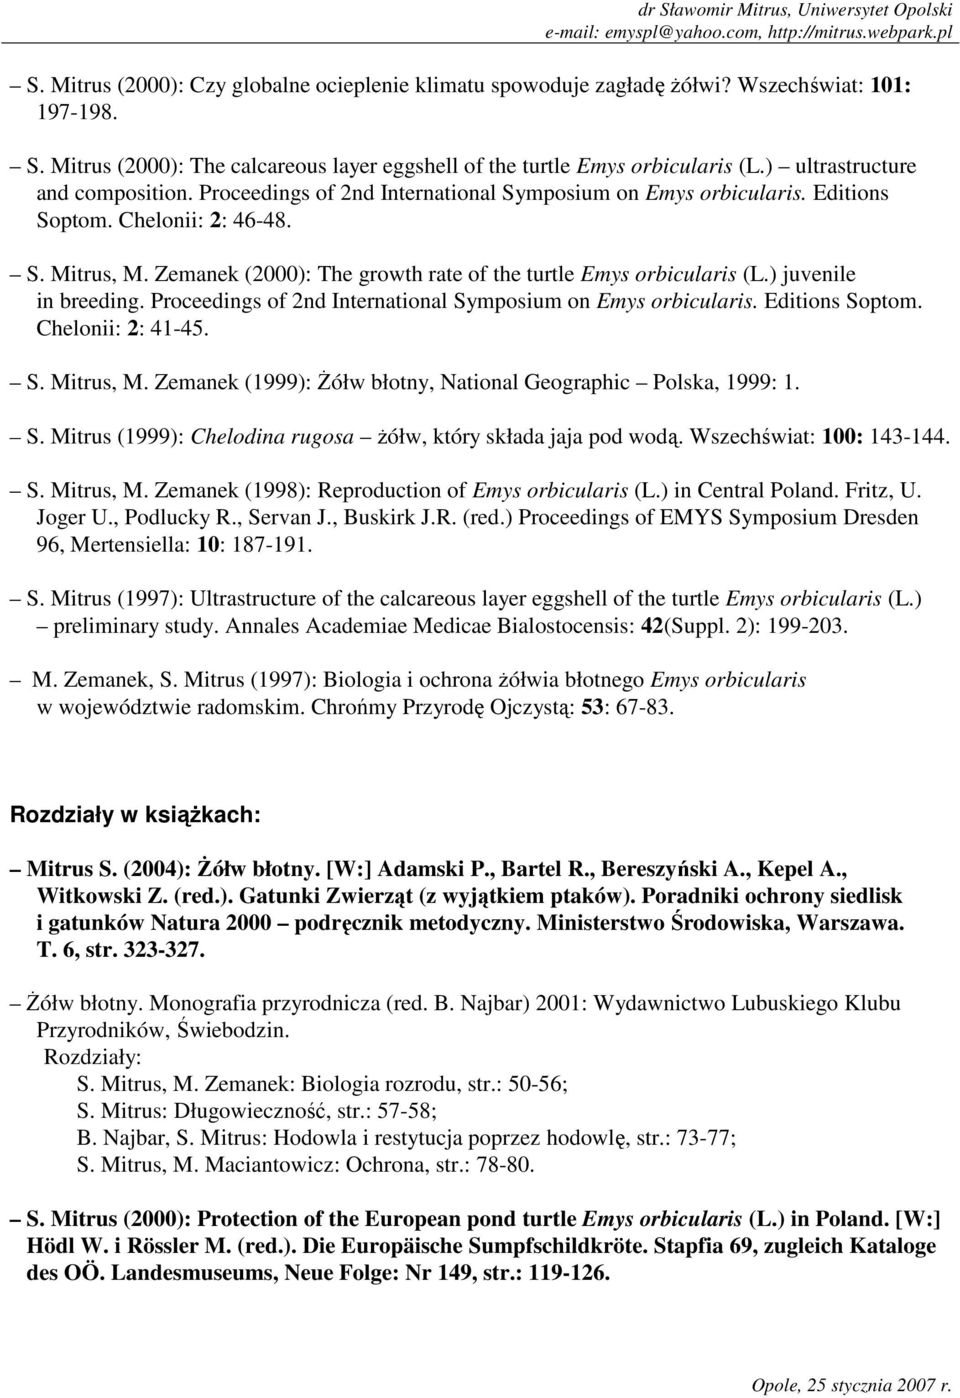 Zemanek (2000): The growth rate of the turtle Emys orbicularis (L.) juvenile in breeding. Proceedings of 2nd International Symposium on Emys orbicularis. Editions Soptom. Chelonii: 2: 41-45. S. Mitrus, M.